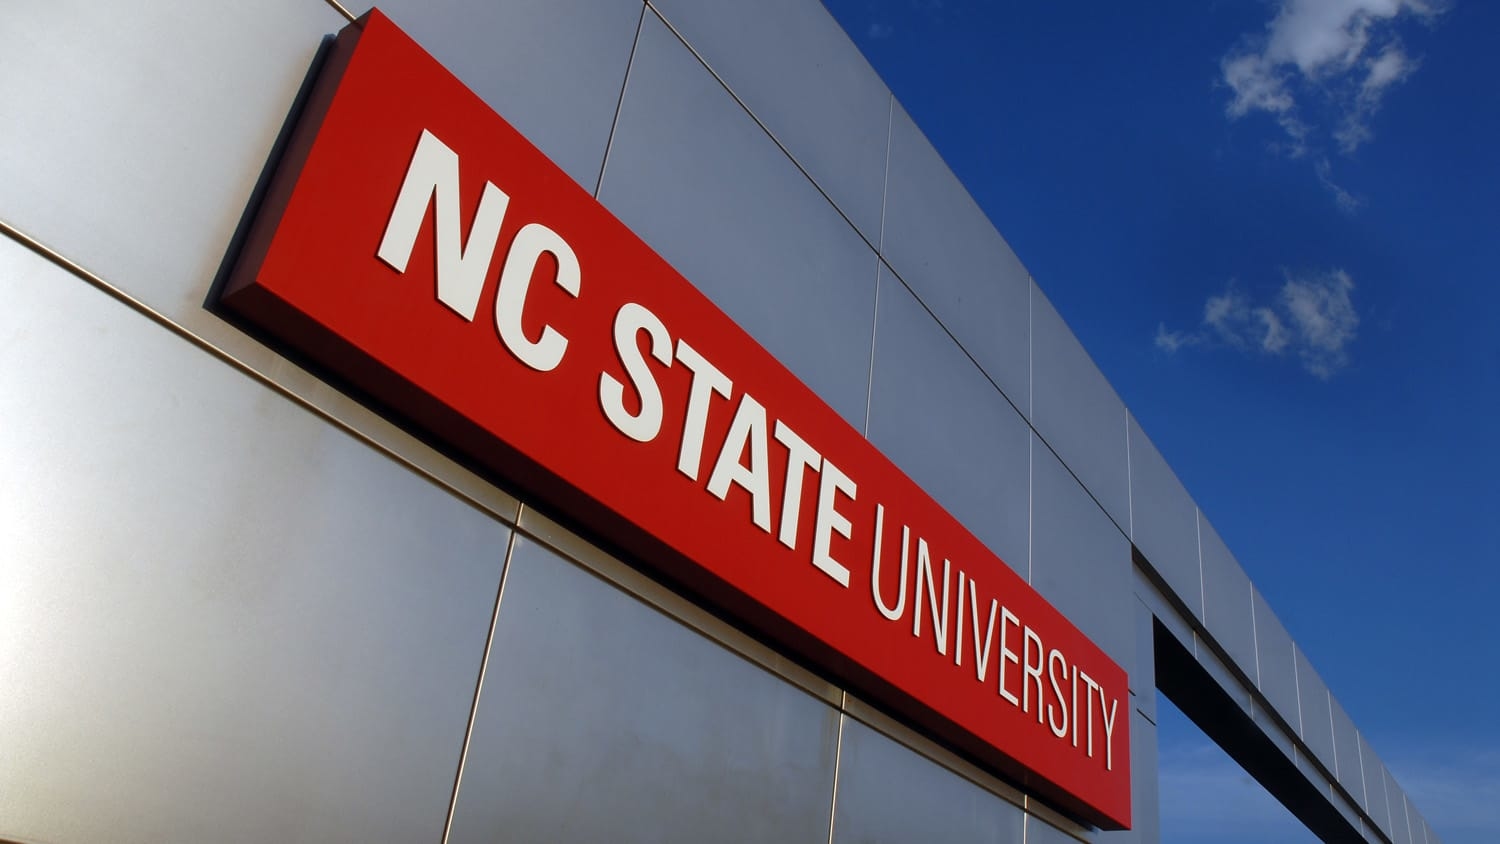 Campus gateway sign reading NC&#160;State University